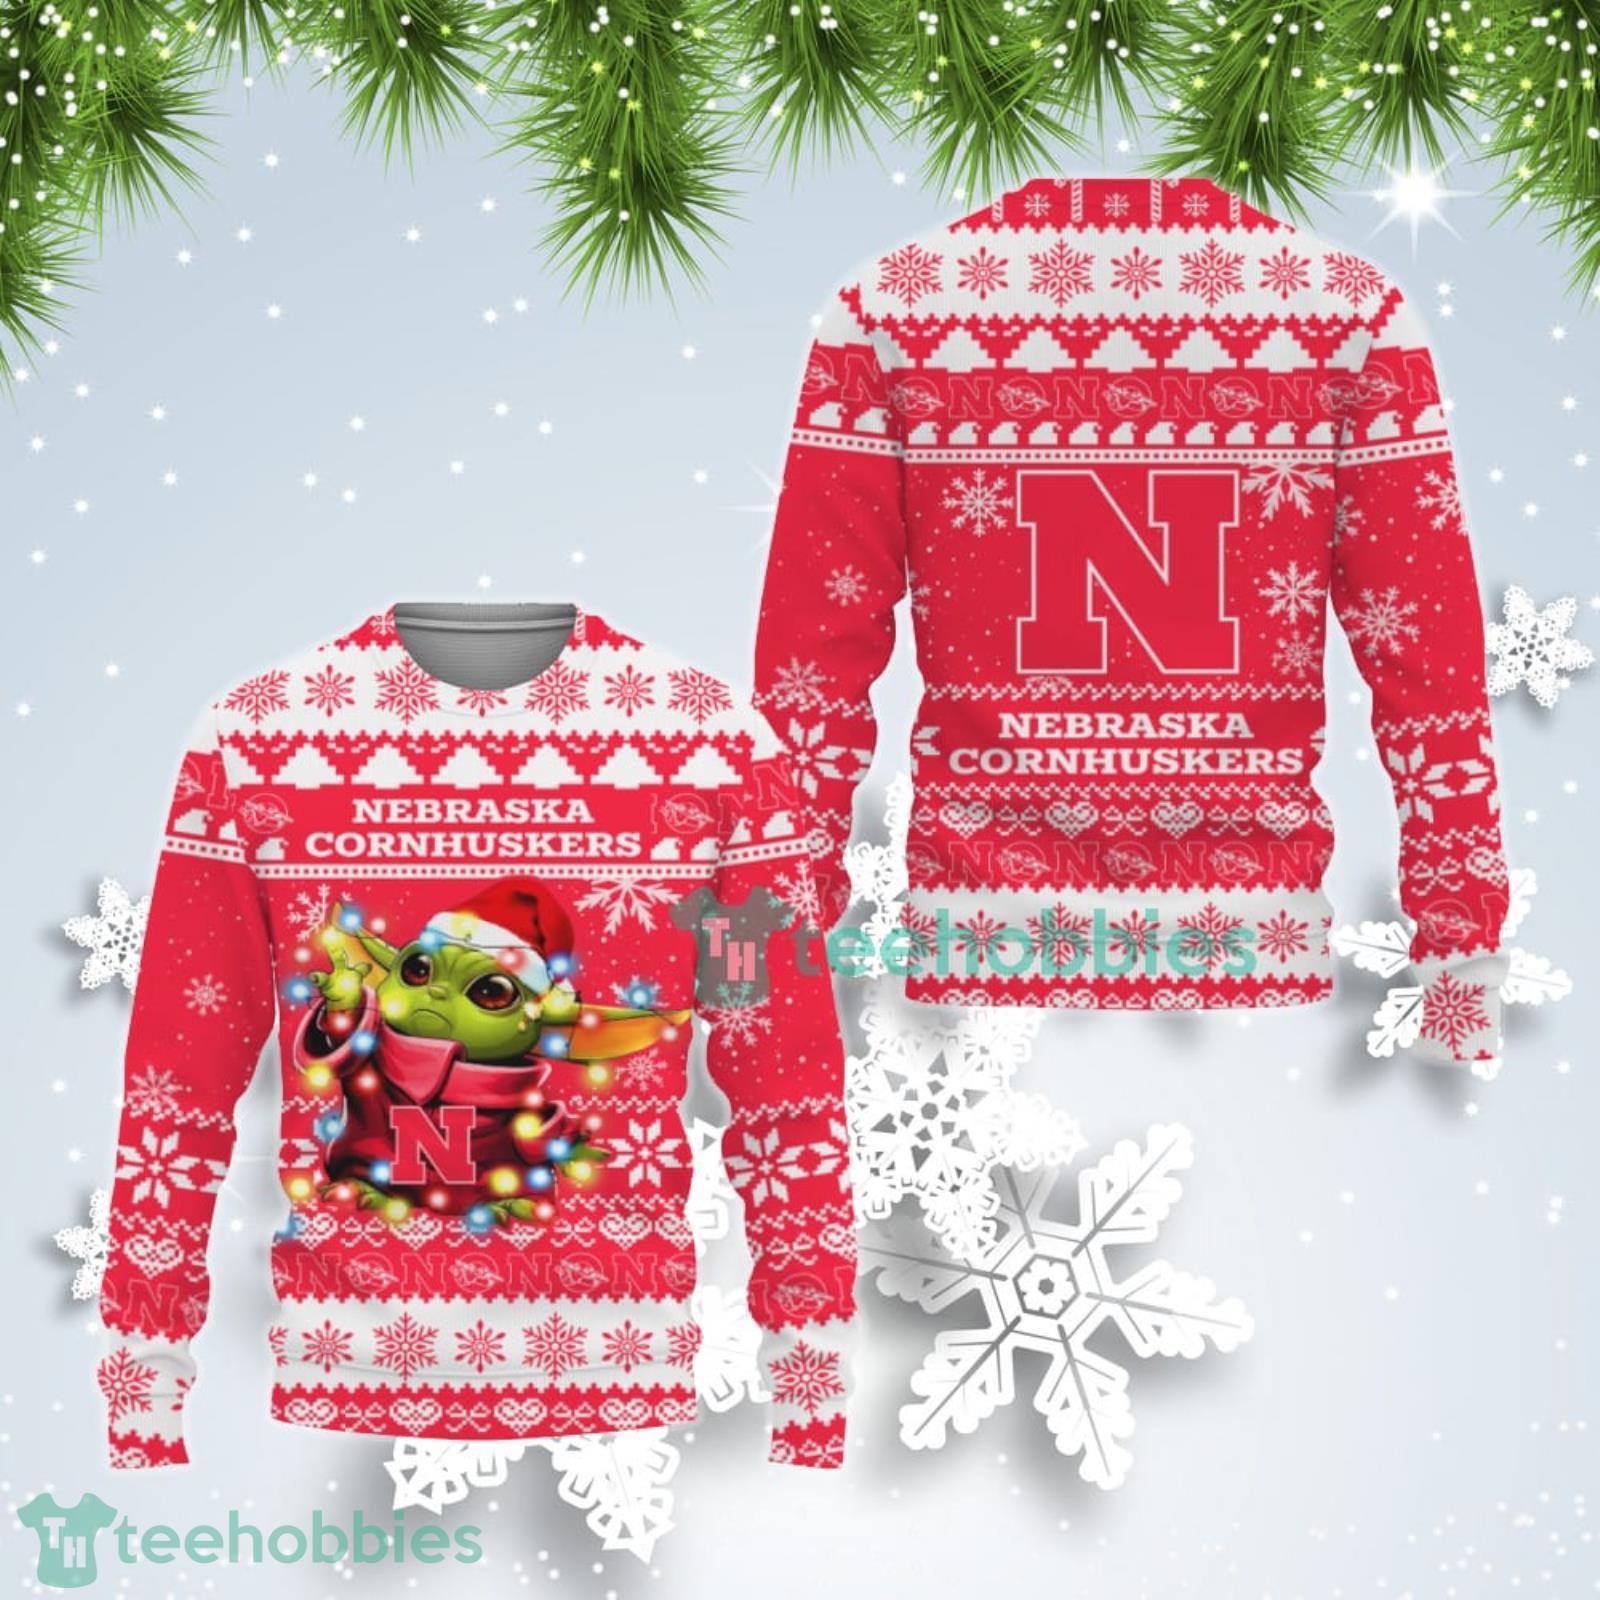 Nebraska Cornhuskers Cute Baby Yoda Star Wars Ugly Christmas Sweater Product Photo 1